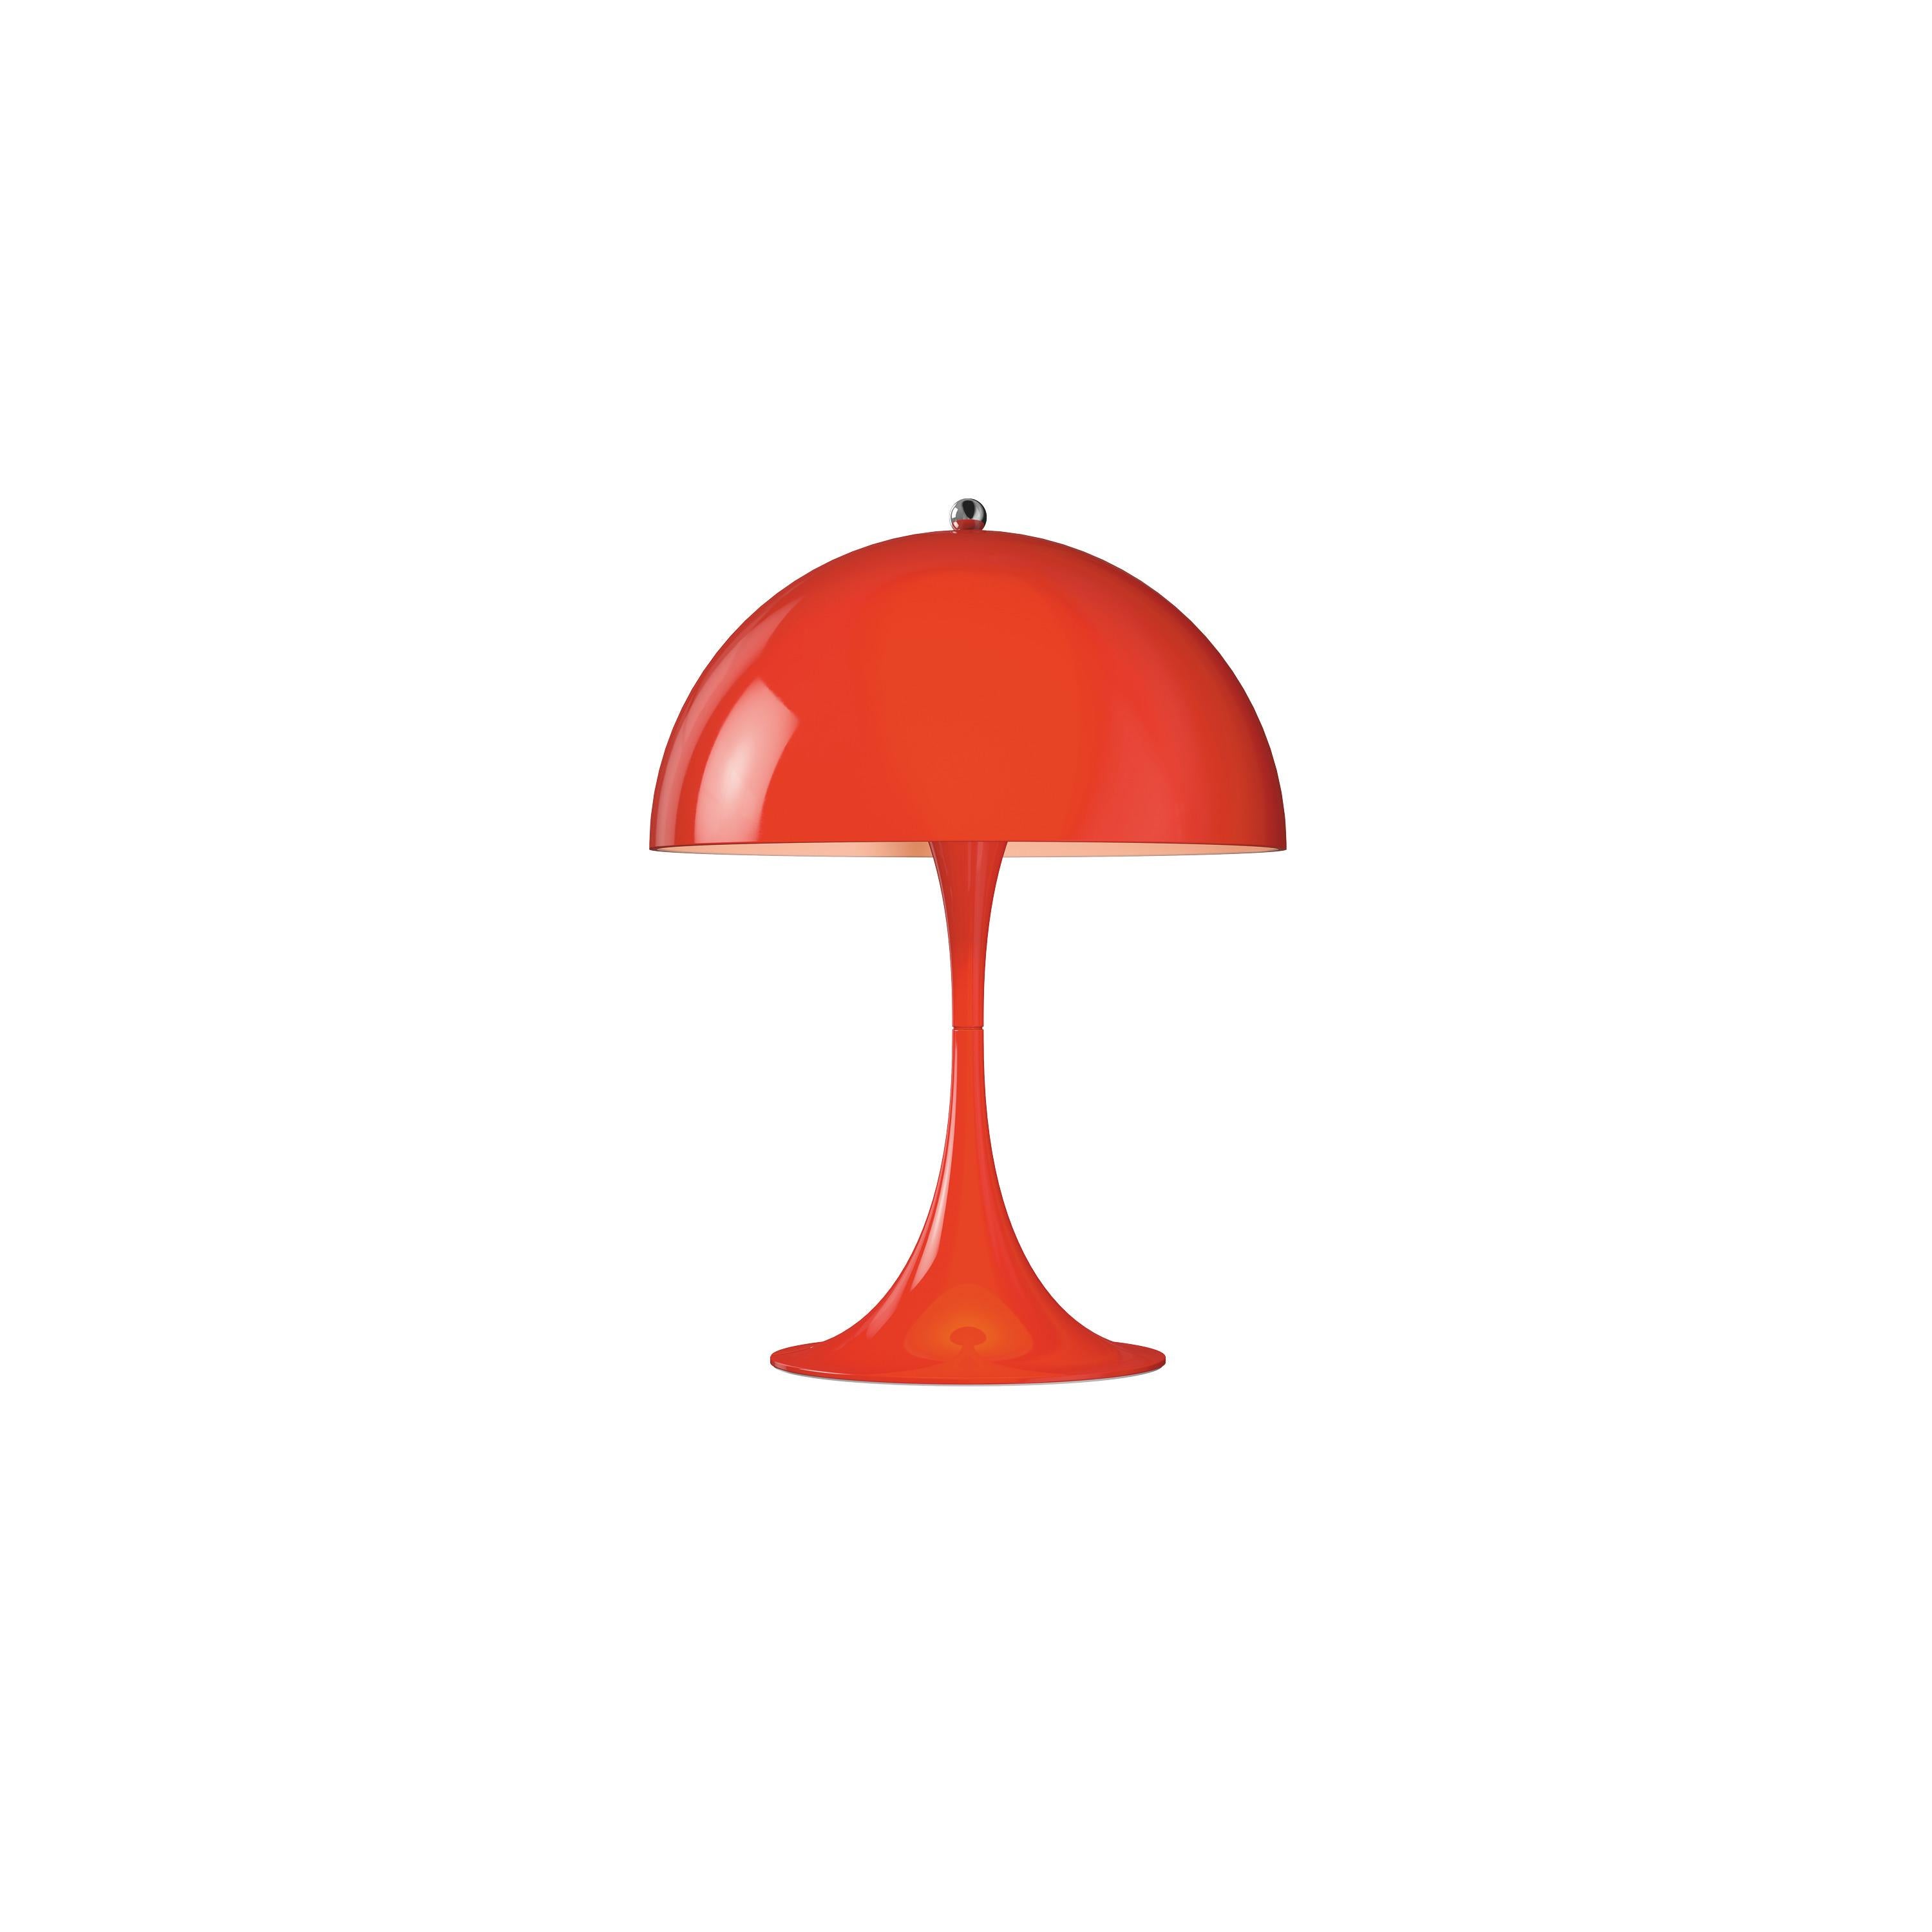 Im Angebot: Louis Poulsen Panthella 250, Tischlampe von Verner Panton, Rot (red.jpg)